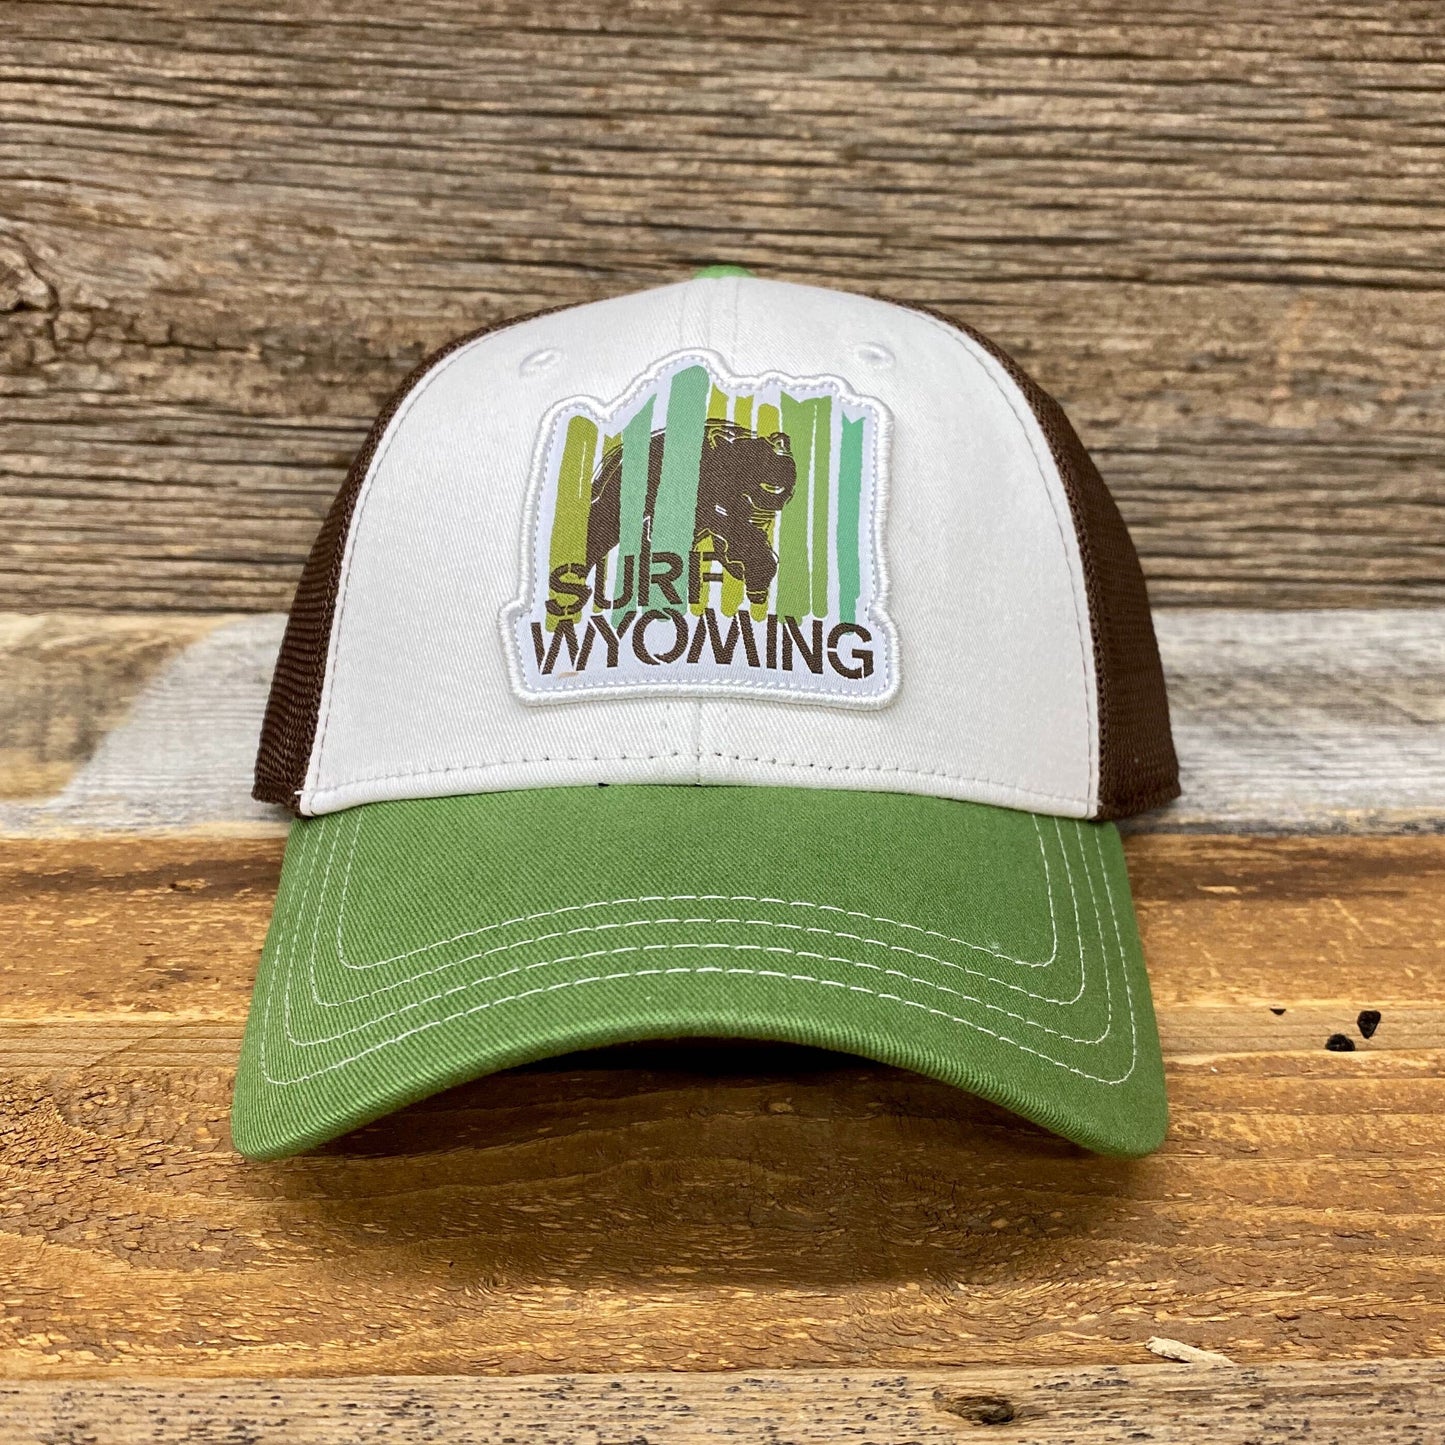 Surf Wyoming® Bear Peak Trucker Hat - Green Multi